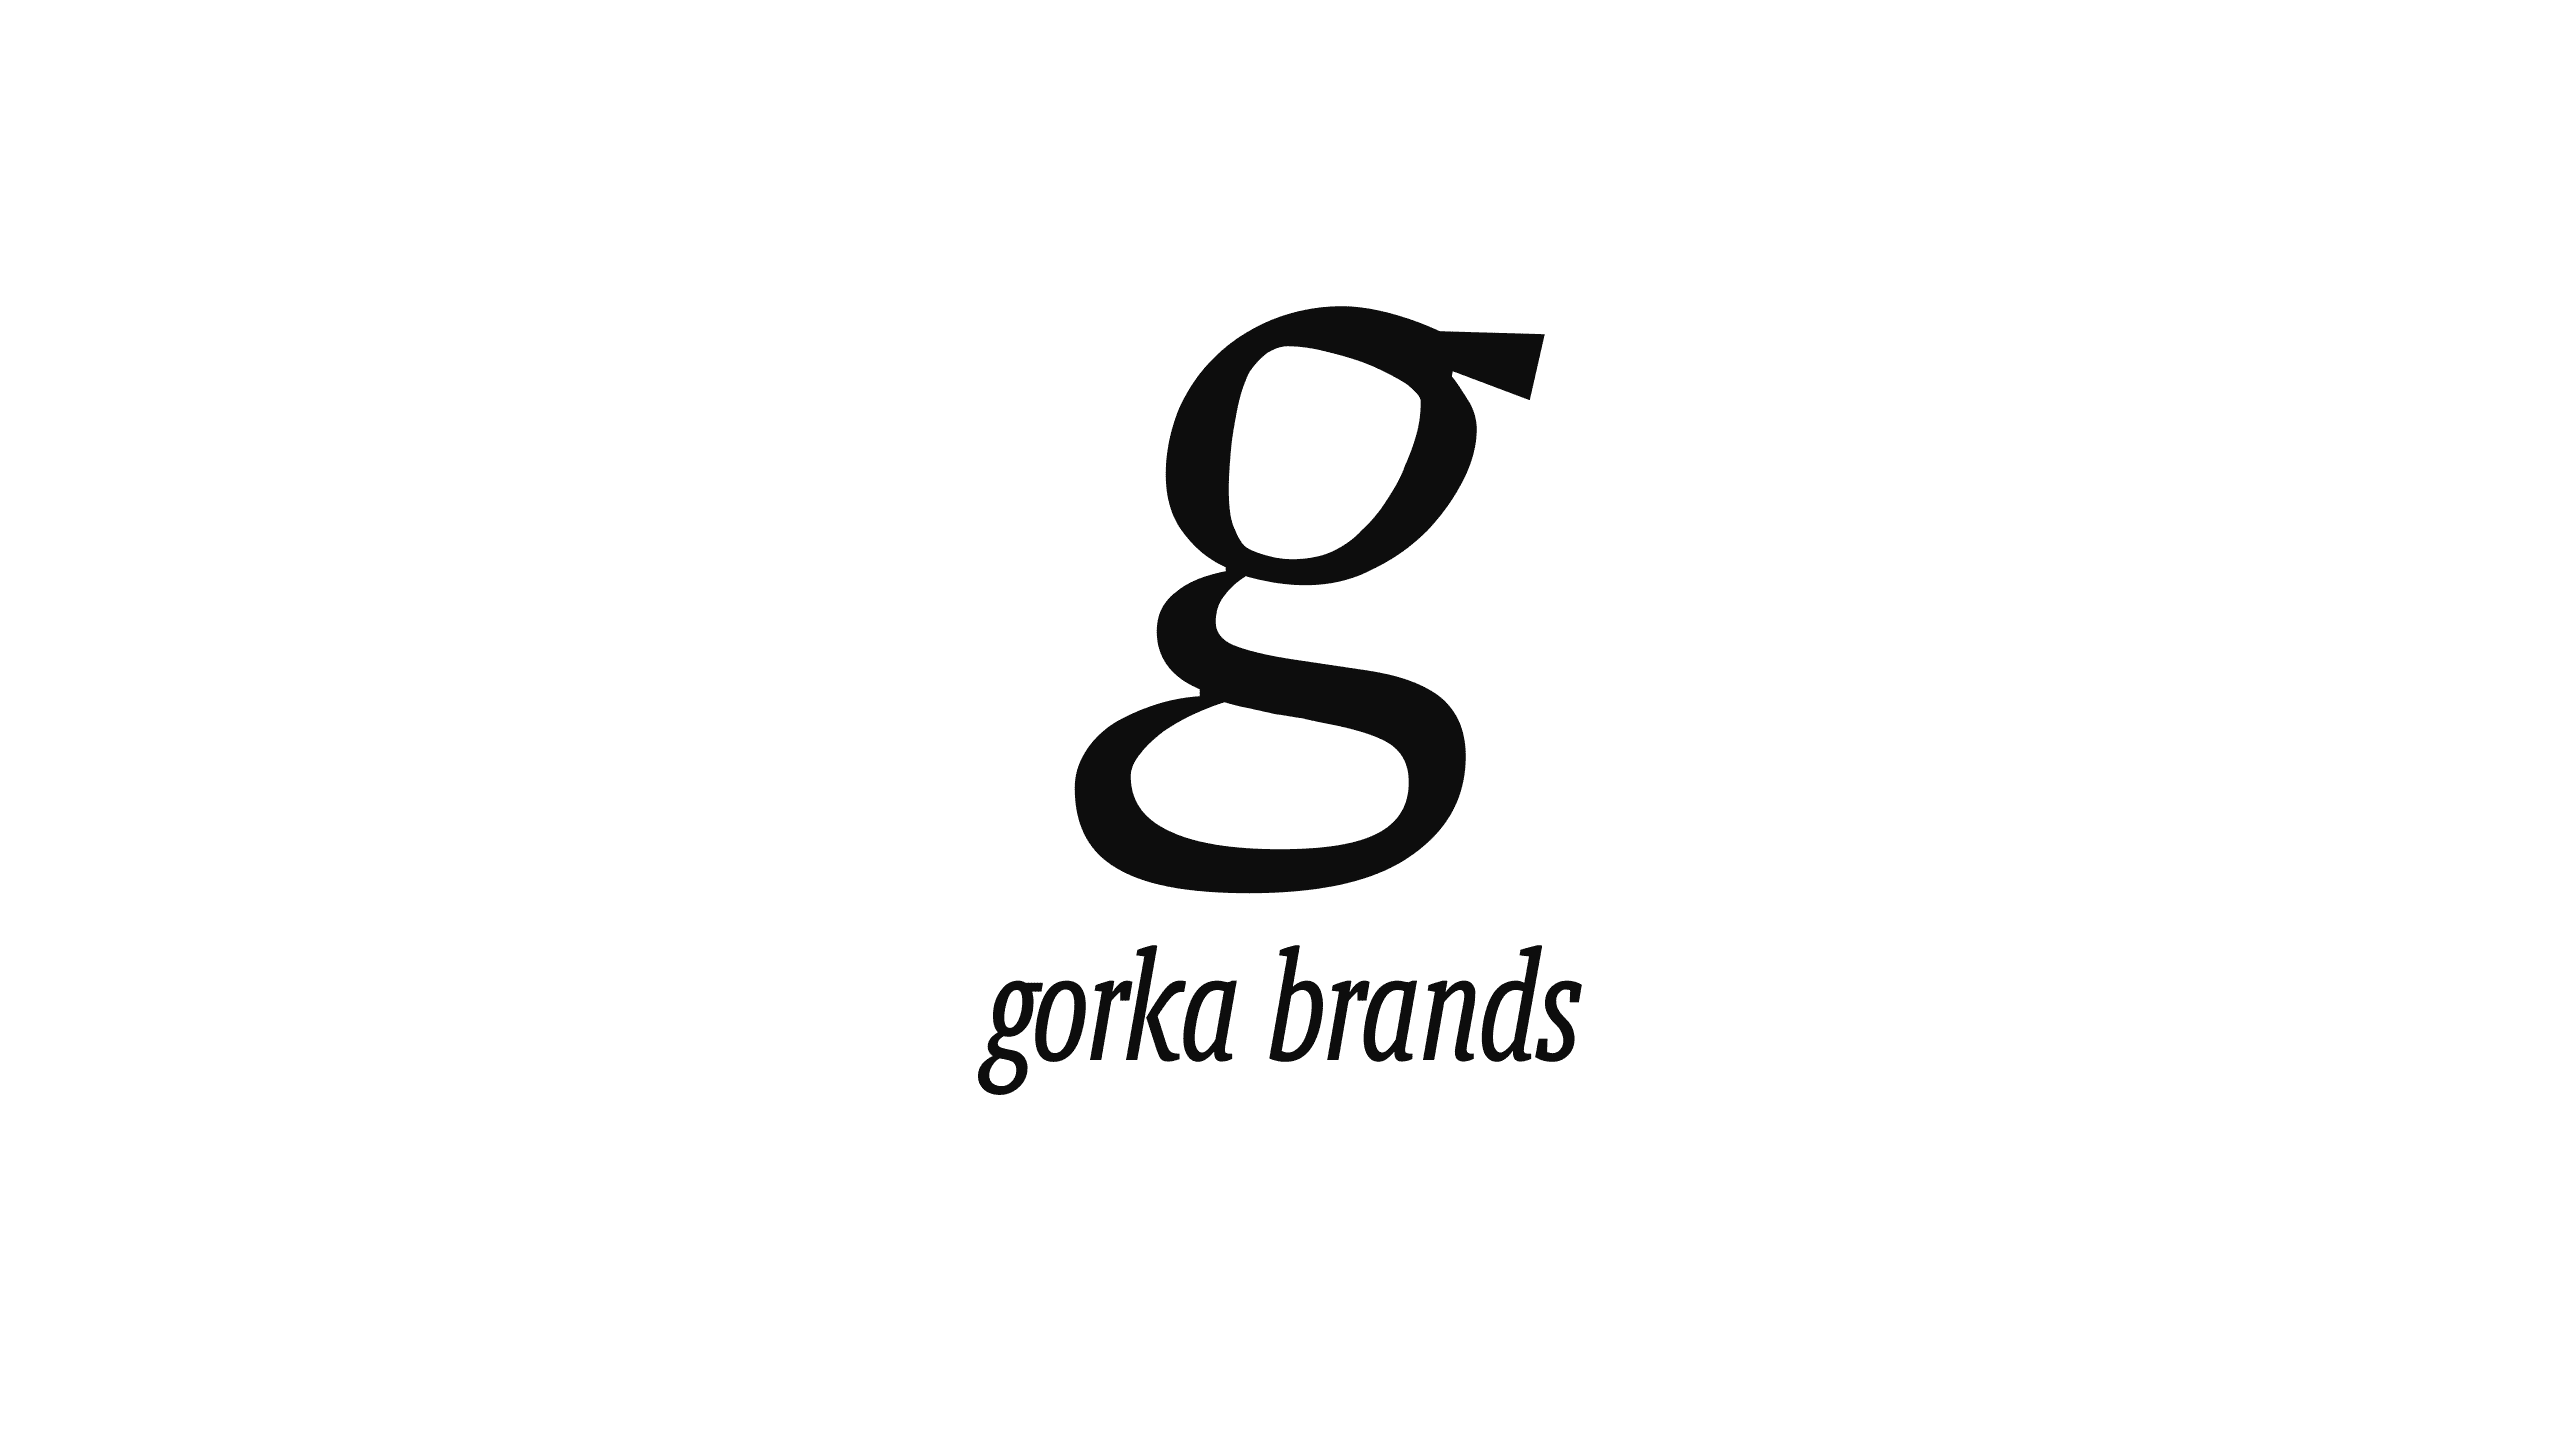 Gorka brands